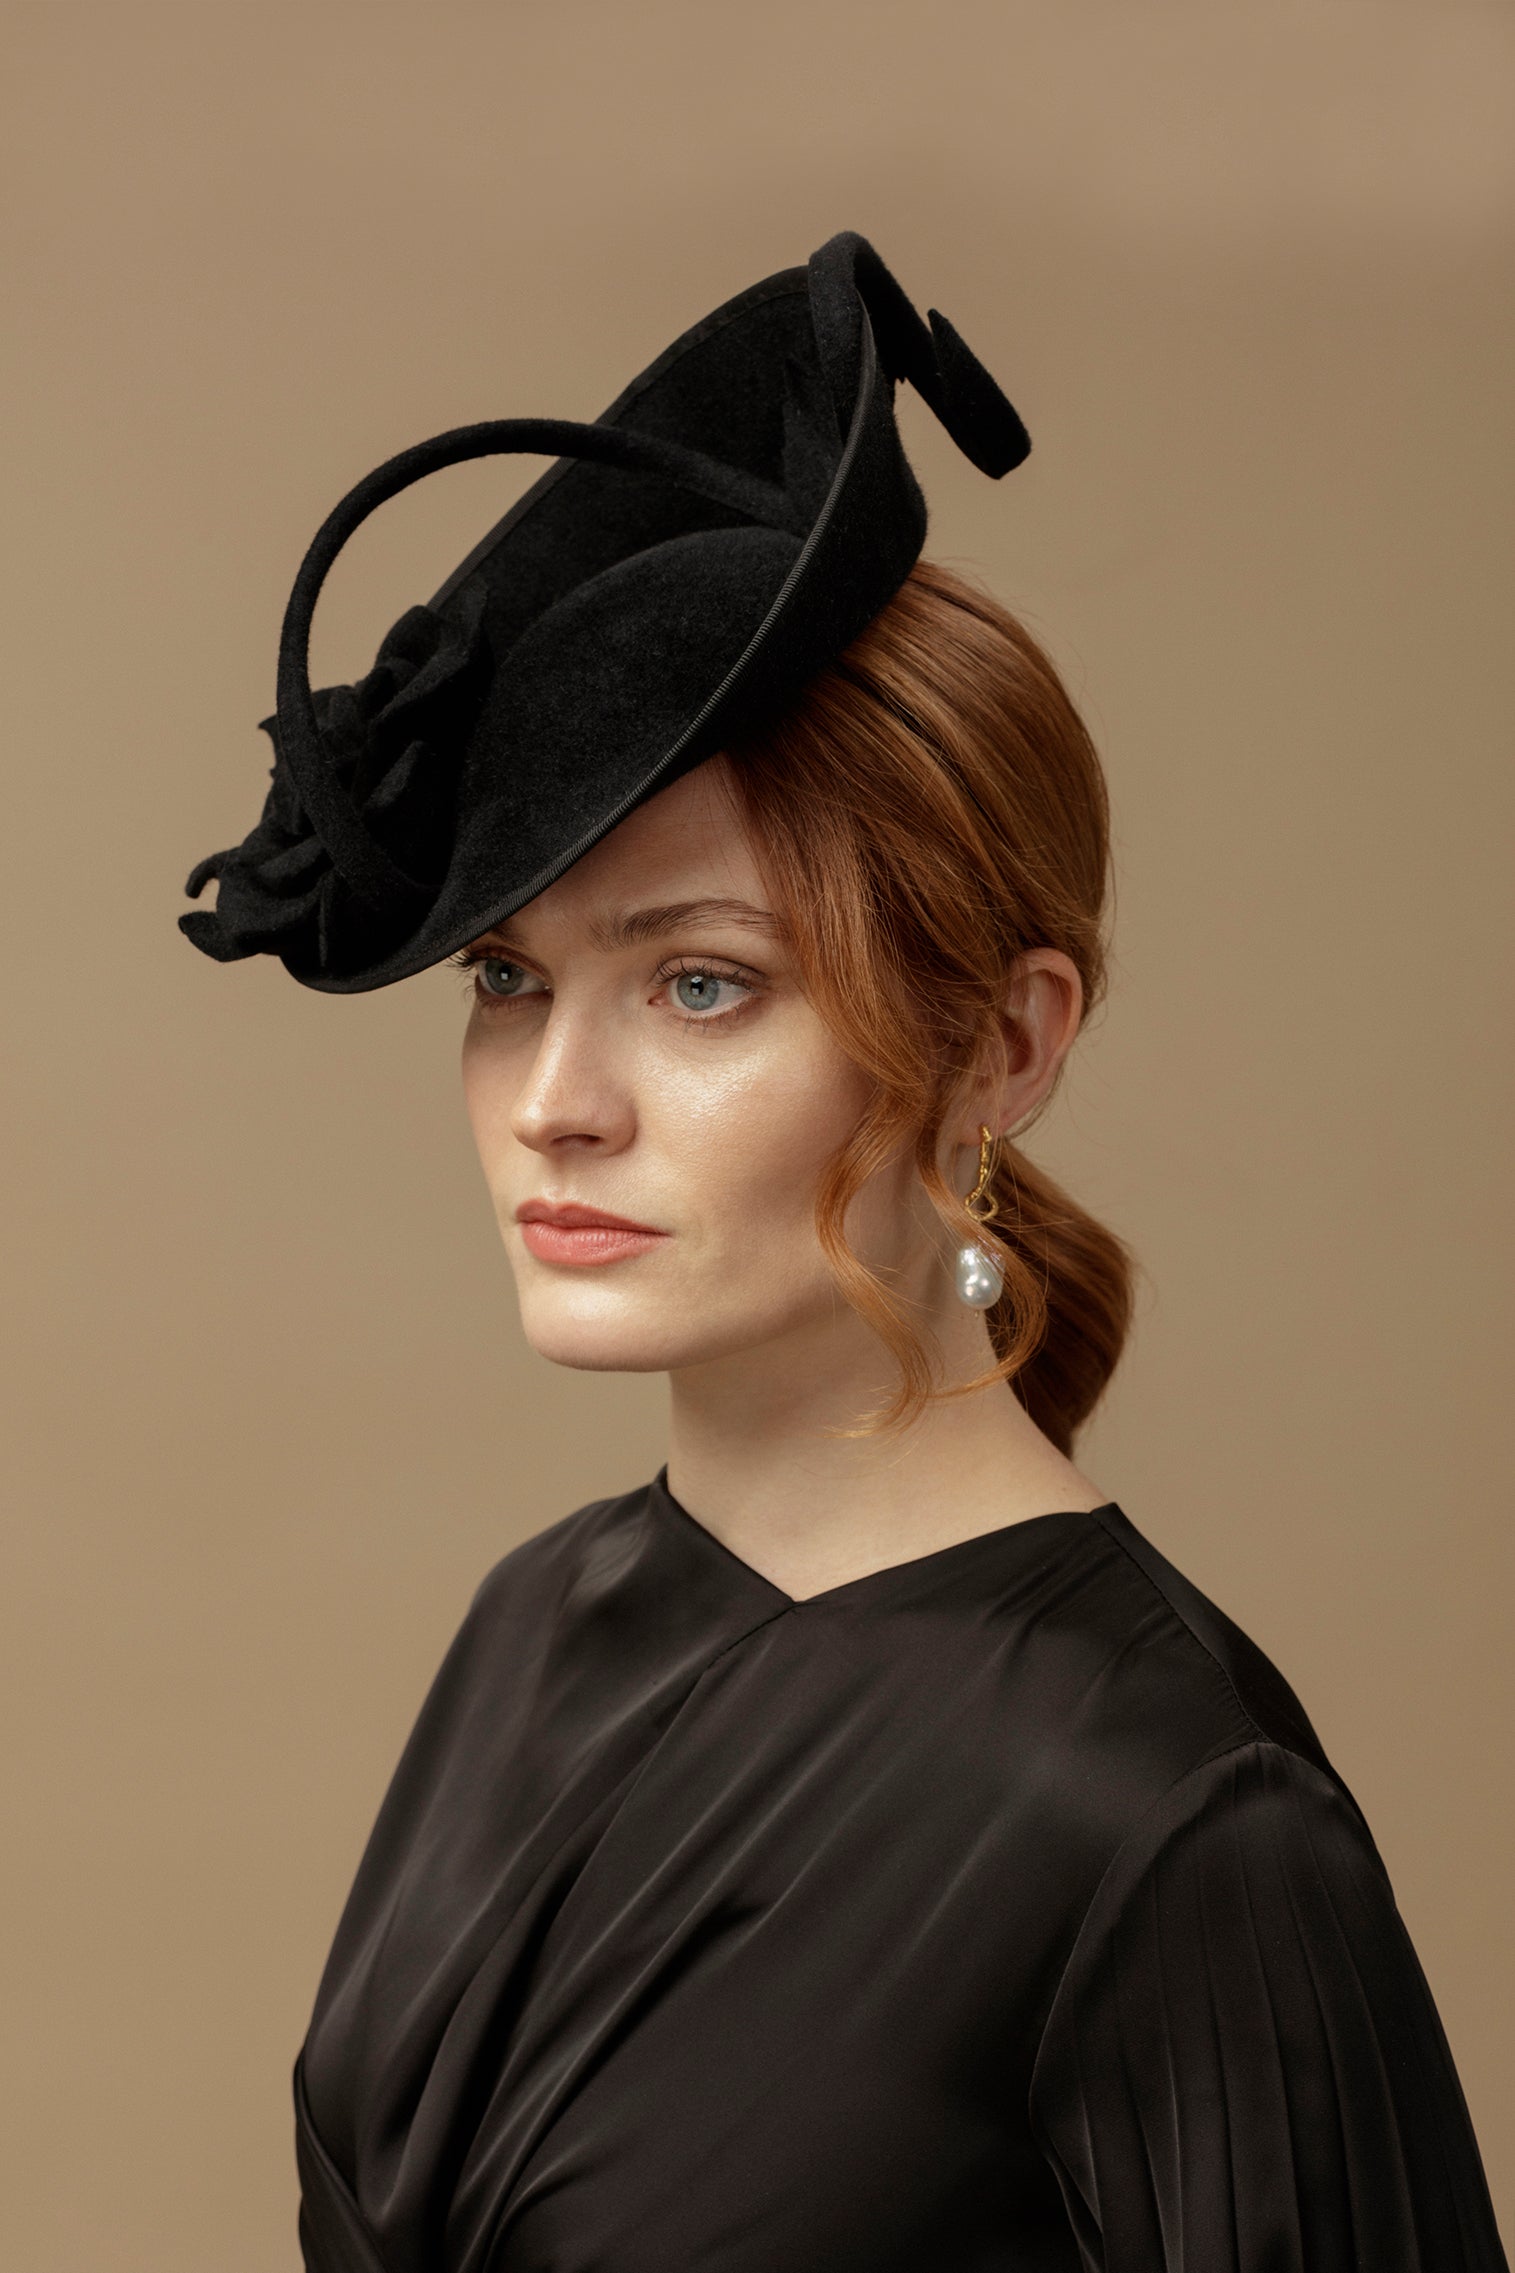 Black Belgravia Rose Hat - Black Hats & Headpieces for Women - Lock & Co. Hatters London UK